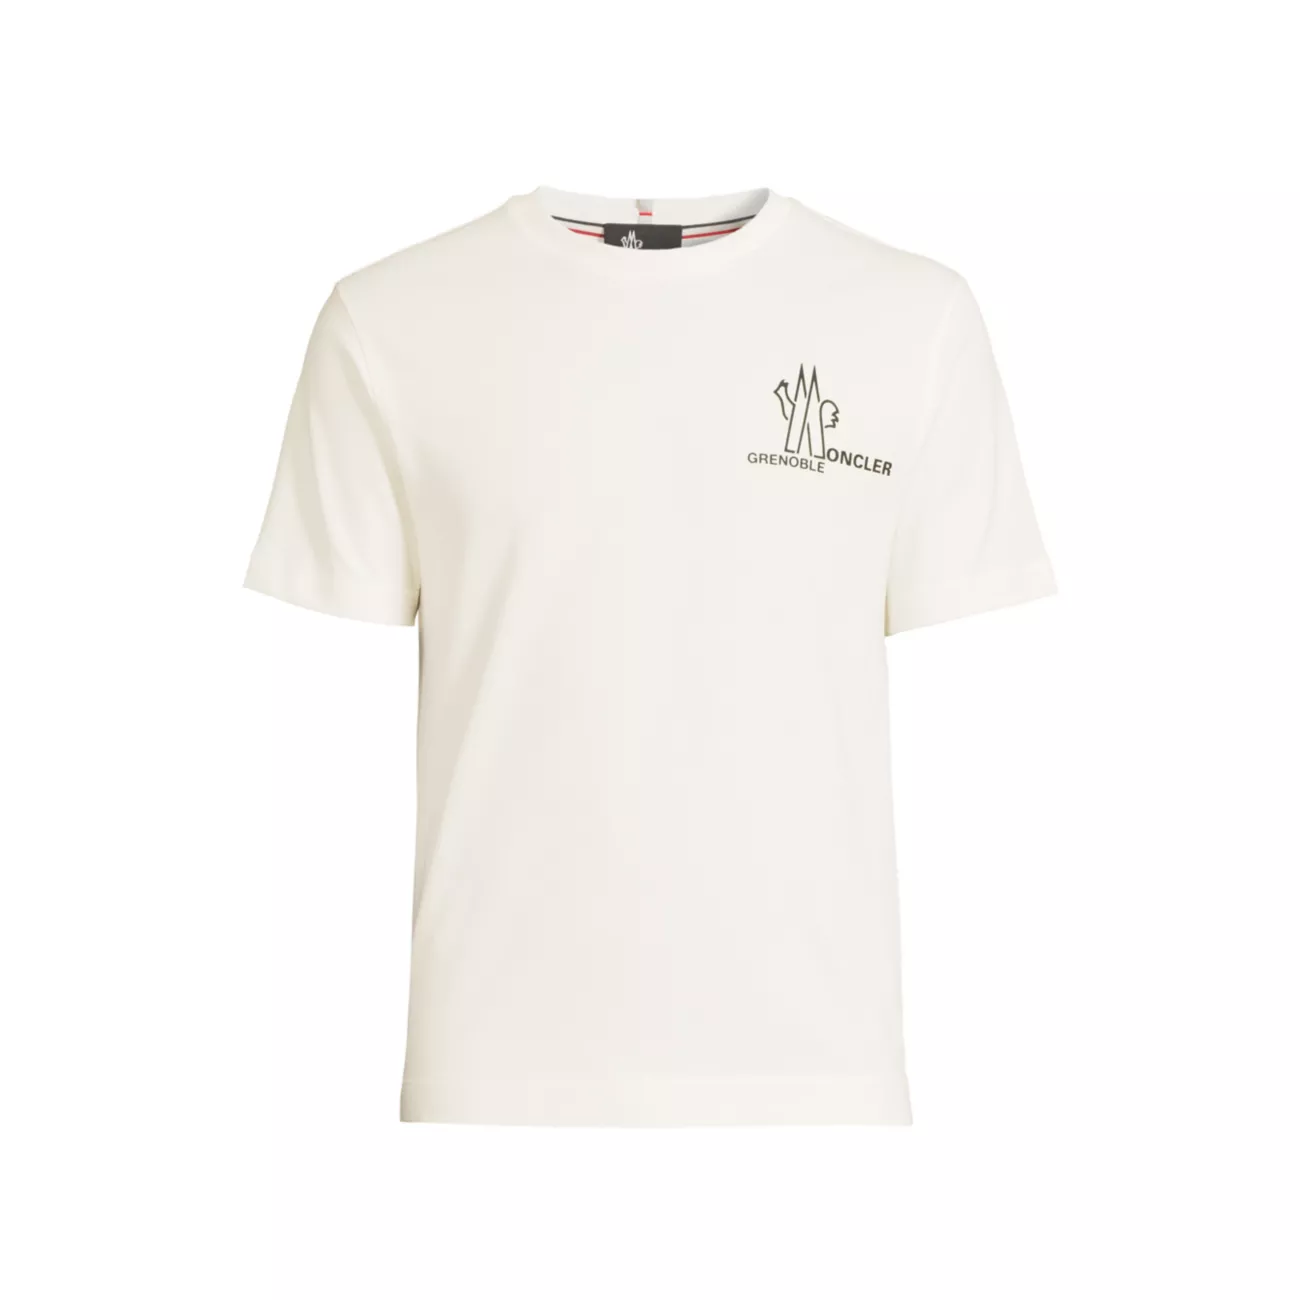 Grenoble Graphic T-Shirt Moncler